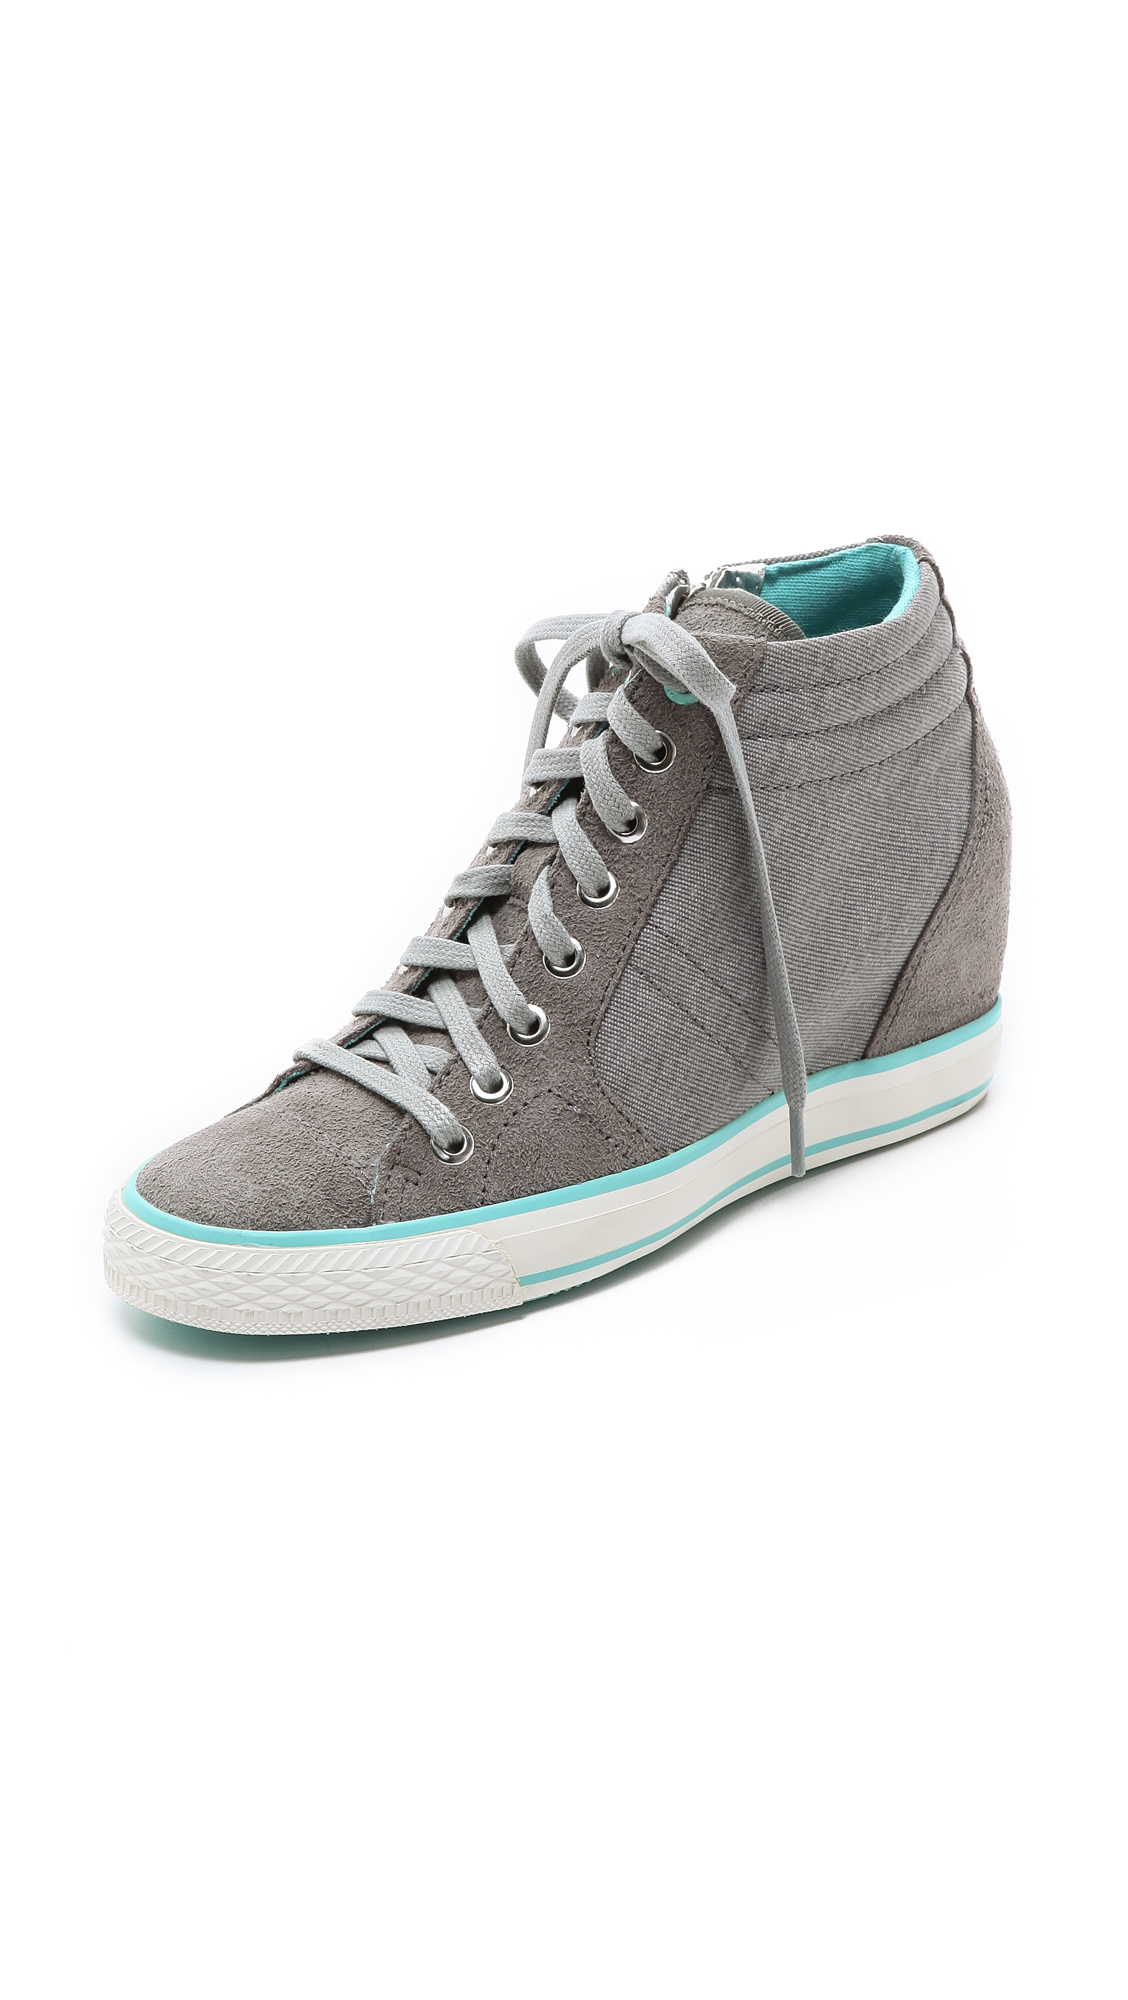 Dkny Cindy Wedge Sneakers in Gray (Grey)